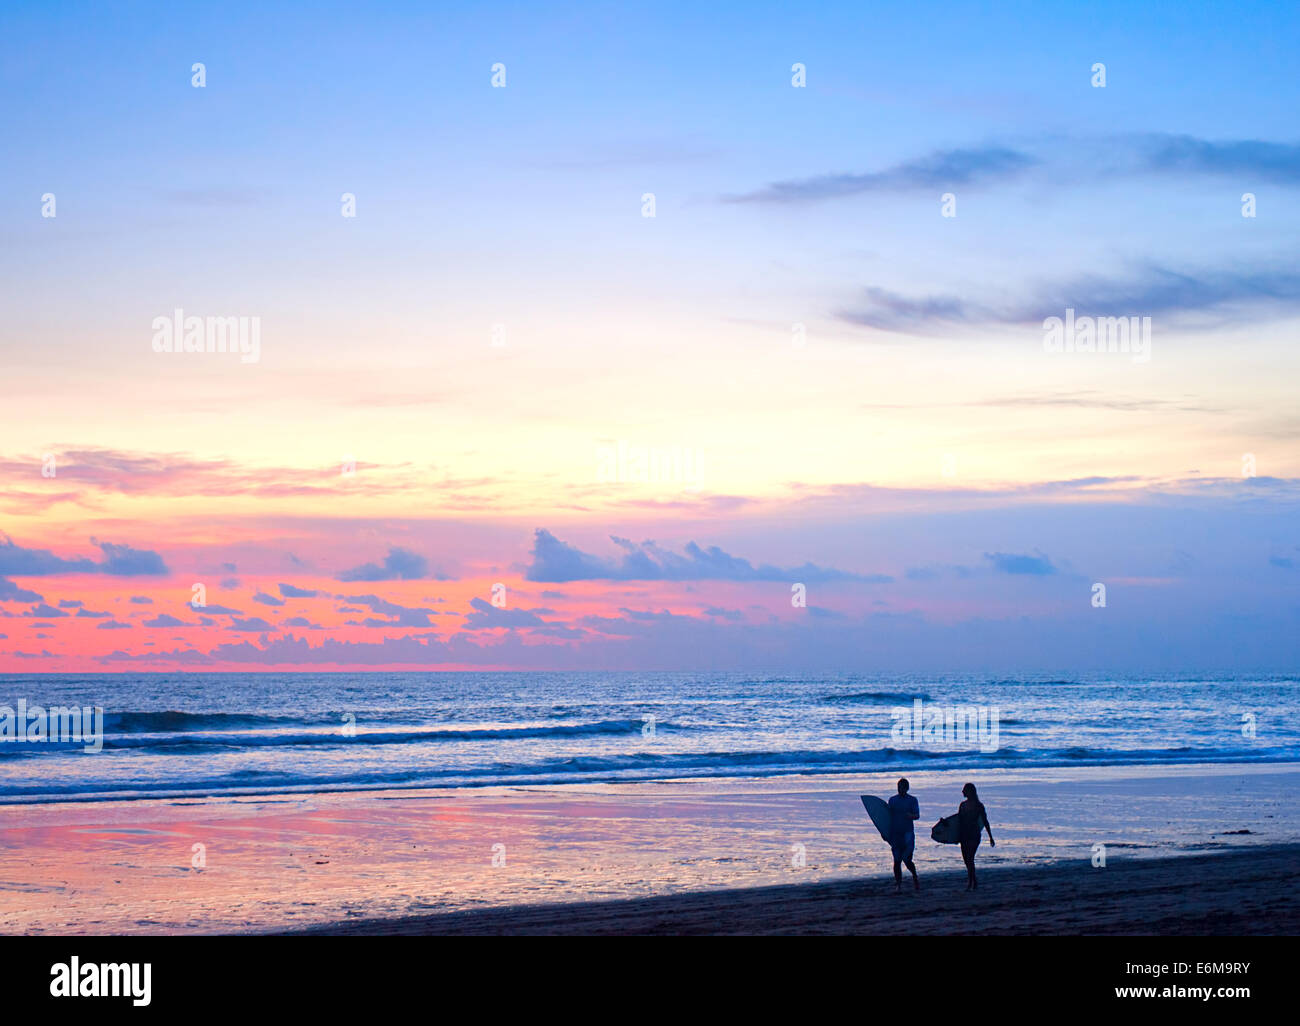 Couple of surfers walking on the beach on Bali island, Indonesia Stock Photo